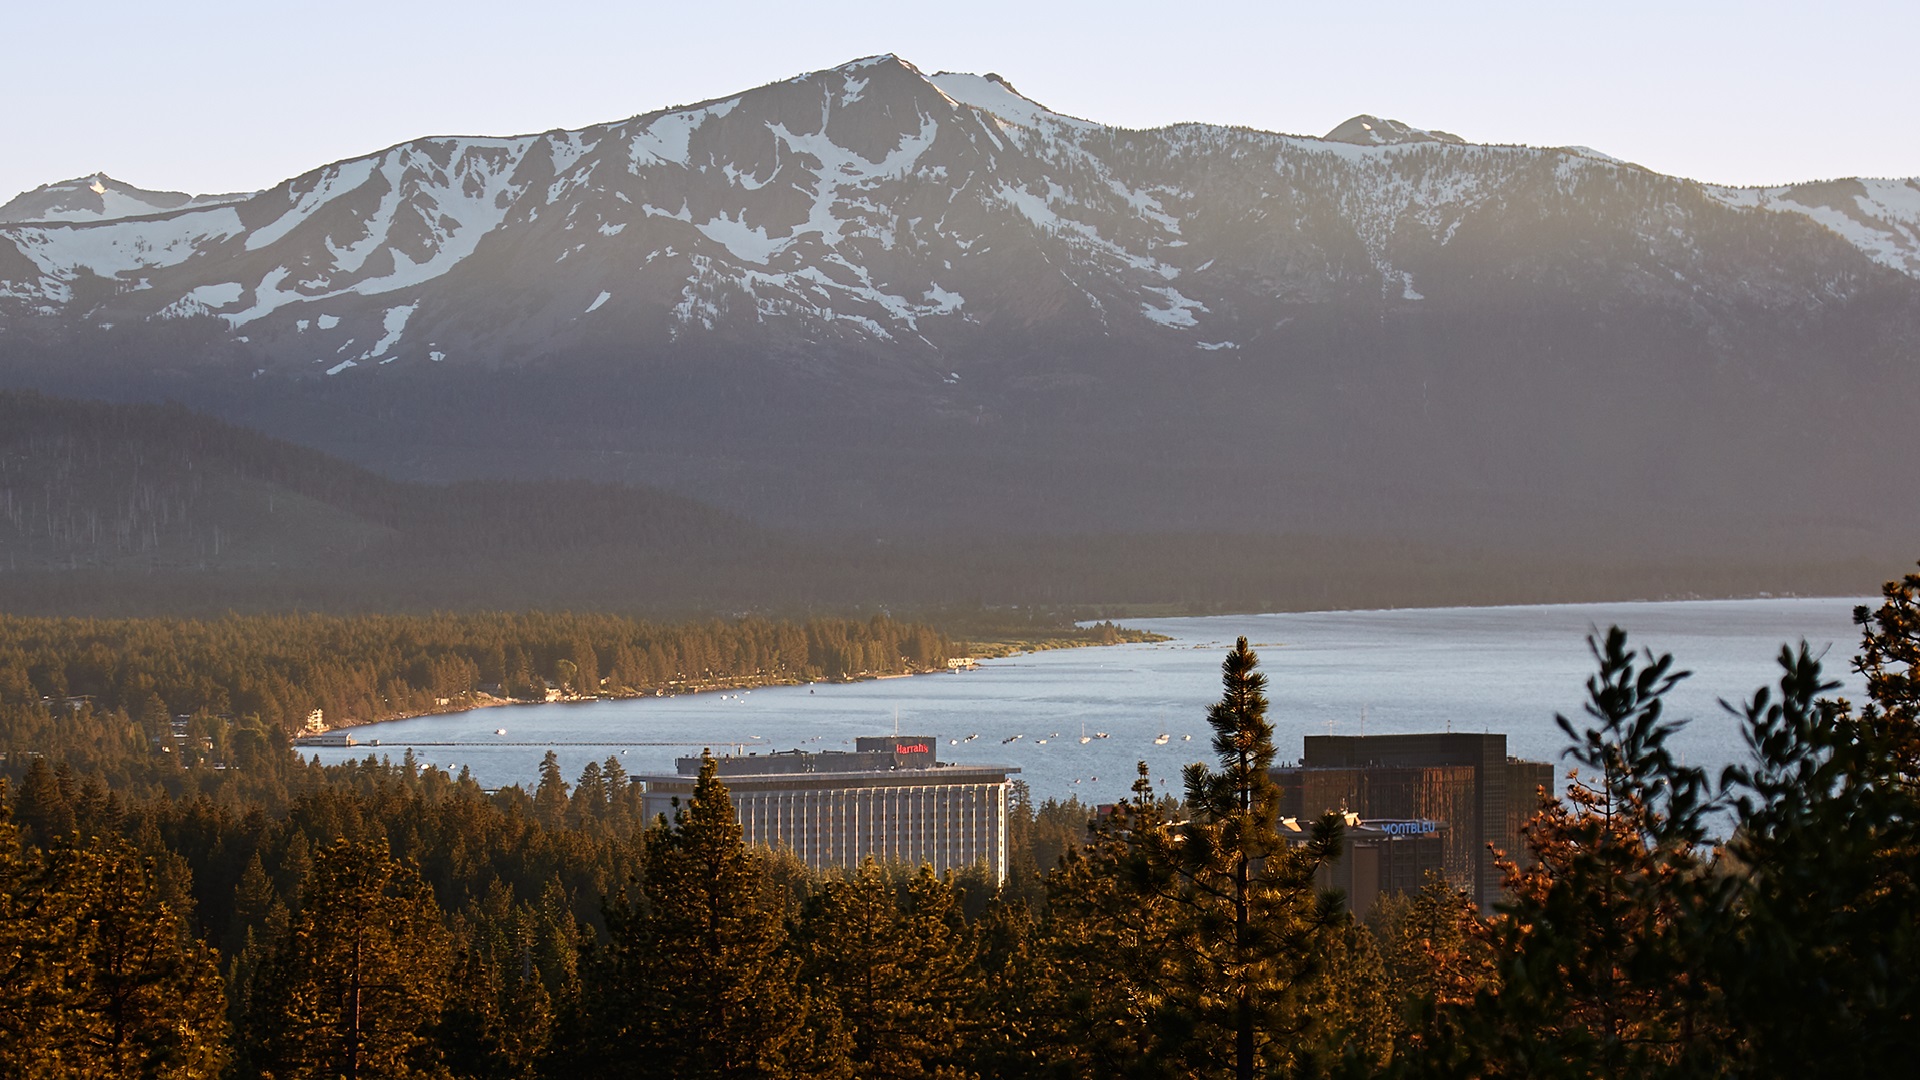 Harrah's Casino & Resort with Lake Tahoe in the background